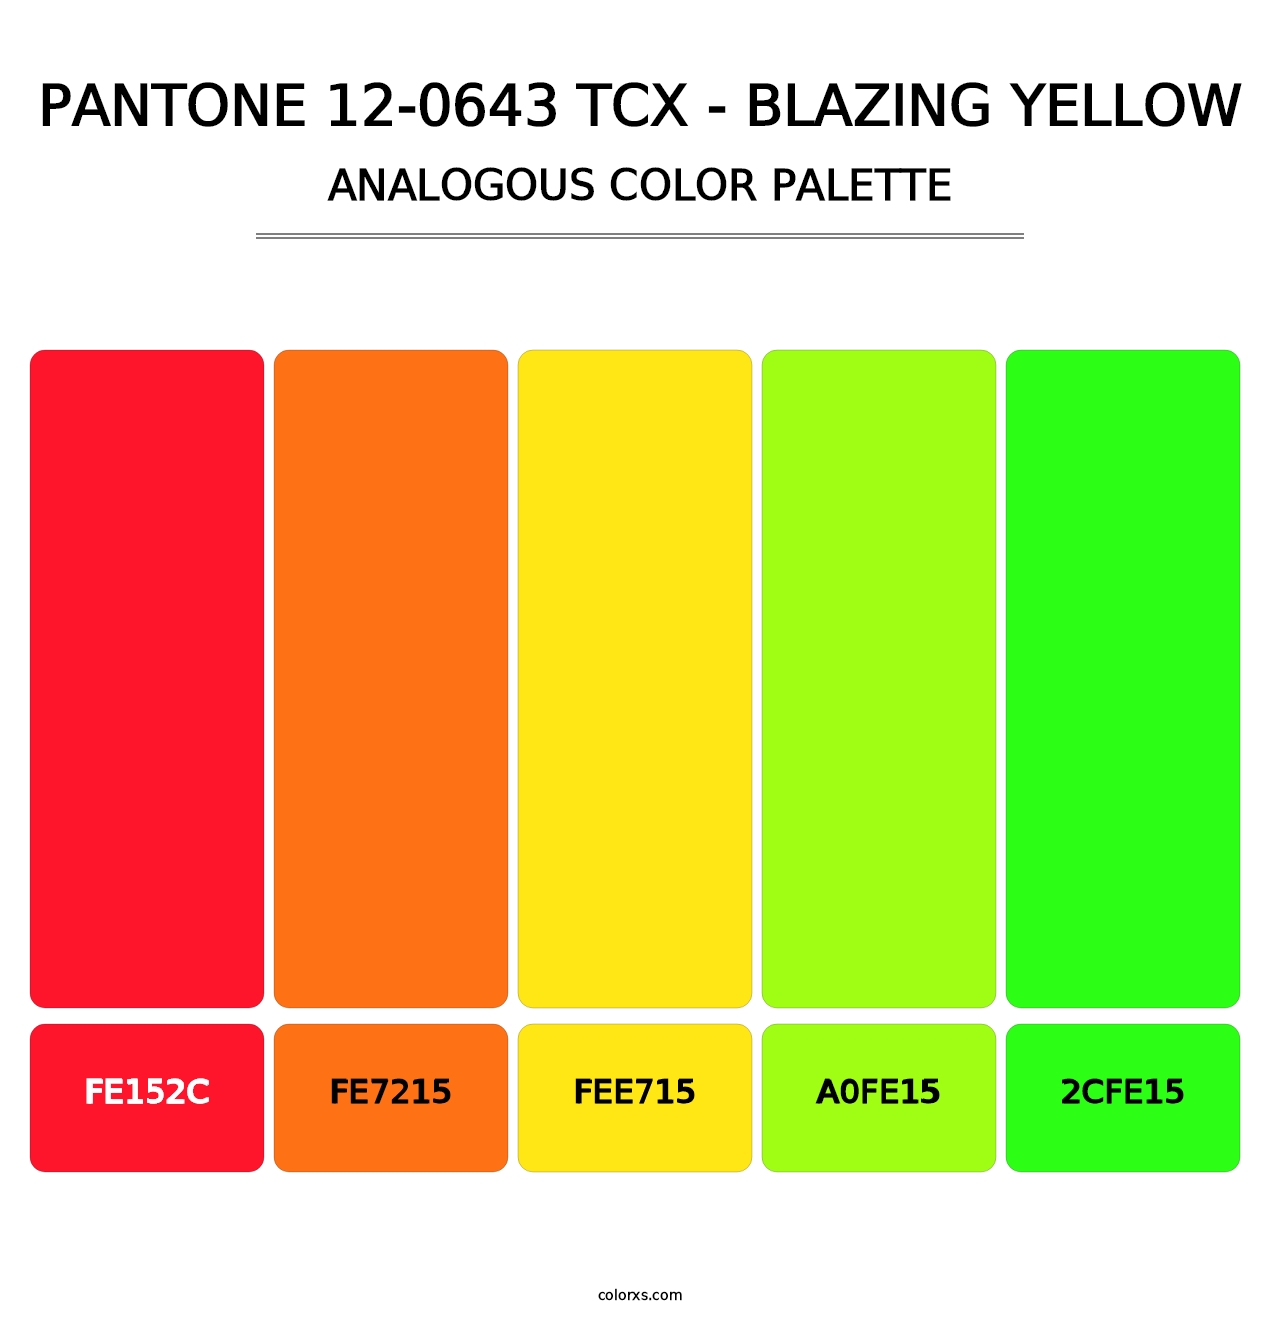 PANTONE 12-0643 TCX - Blazing Yellow - Analogous Color Palette